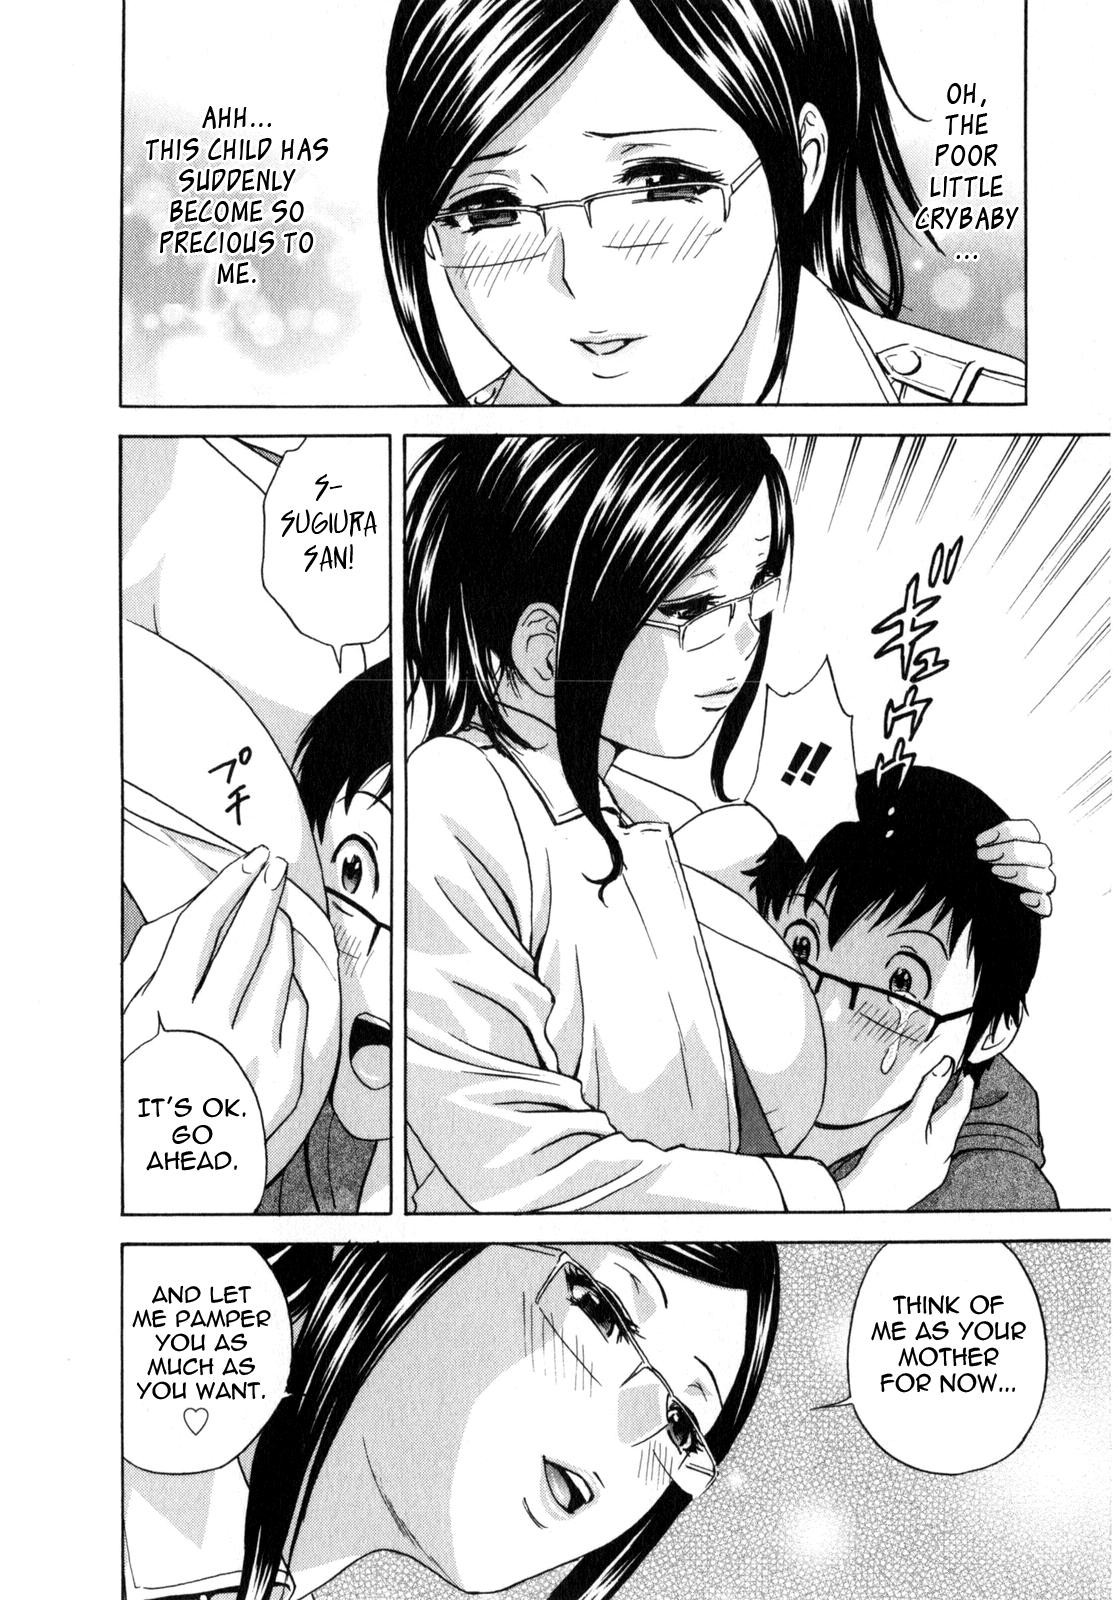 [Hidemaru] Life with Married Women Just Like a Manga 2 - Ch. 1-5 [English] {Tadanohito} 76